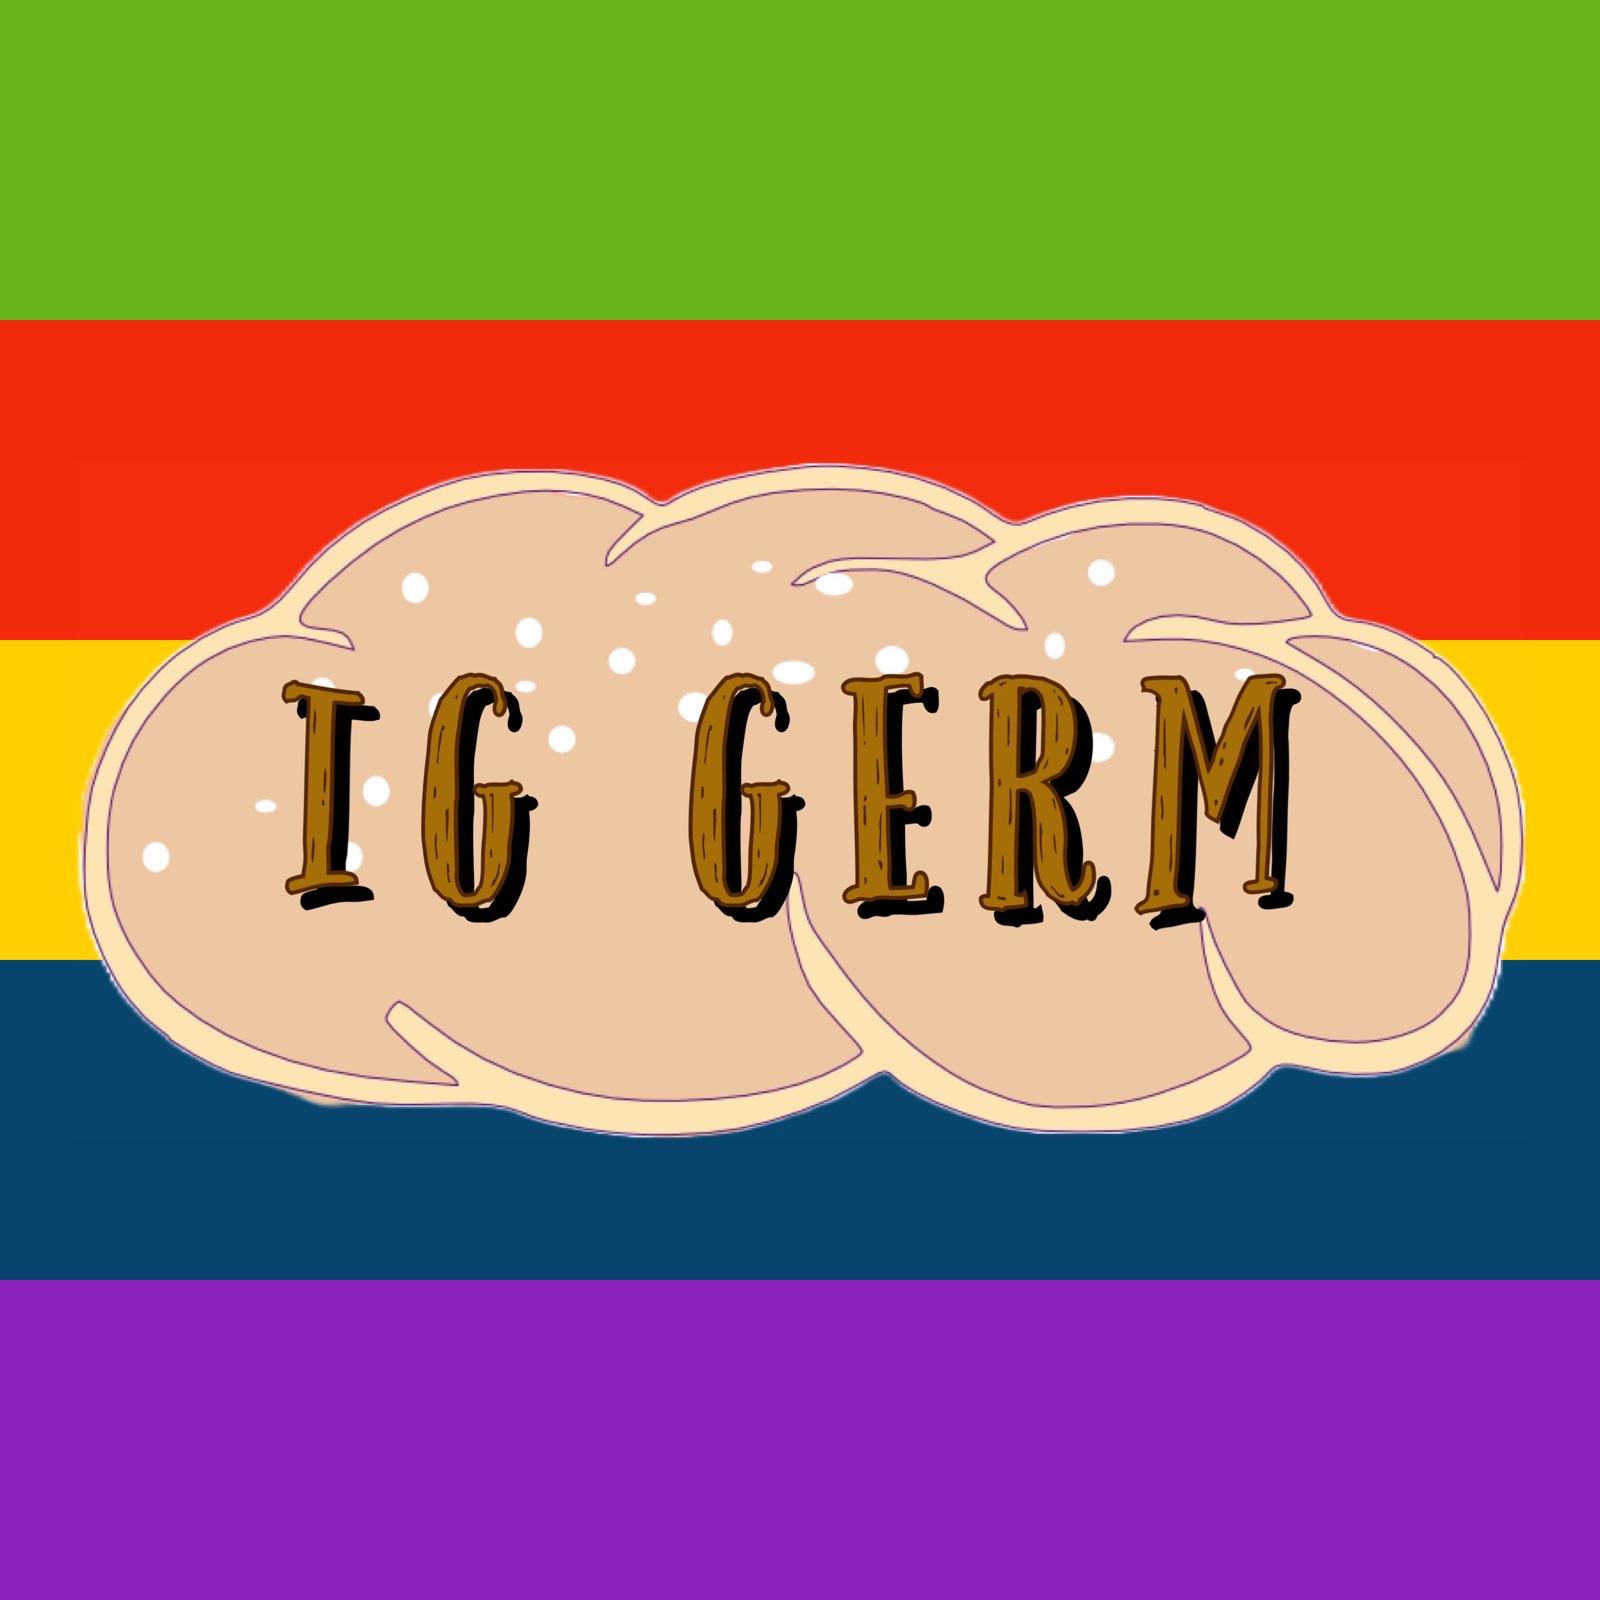 IG Germ: StV Germanistik Uni Wien